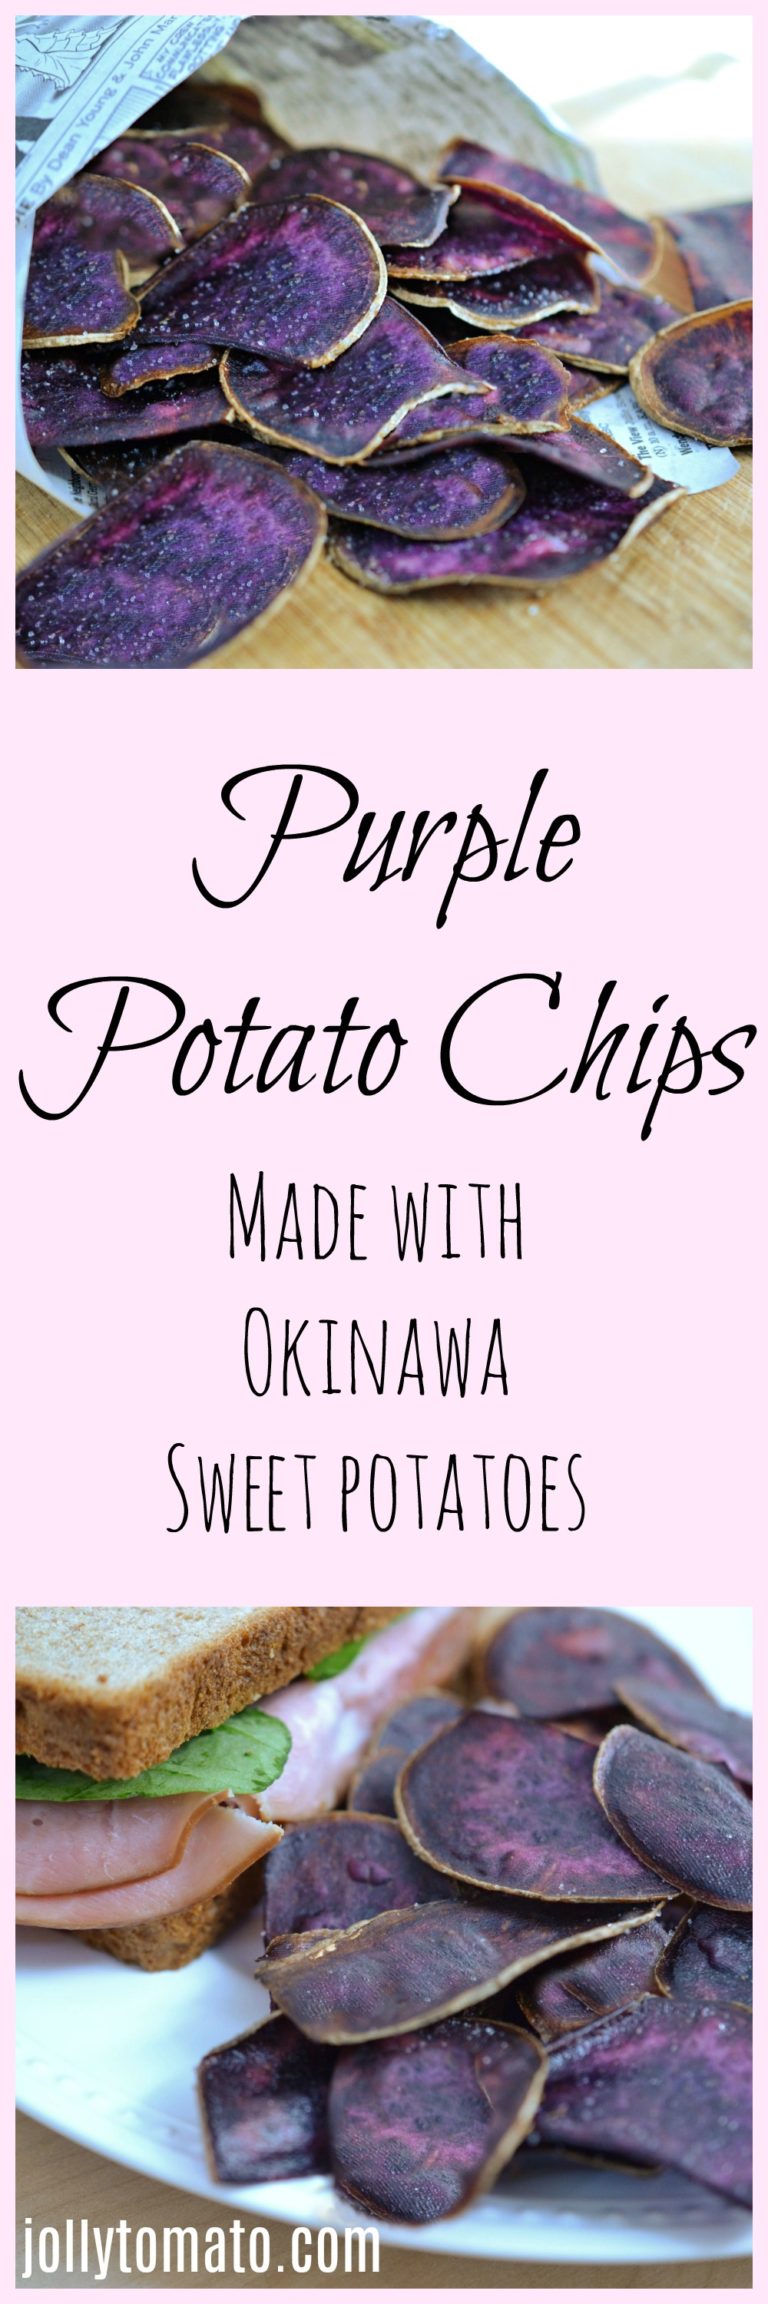 Purple Potato Chips - Jolly Tomato